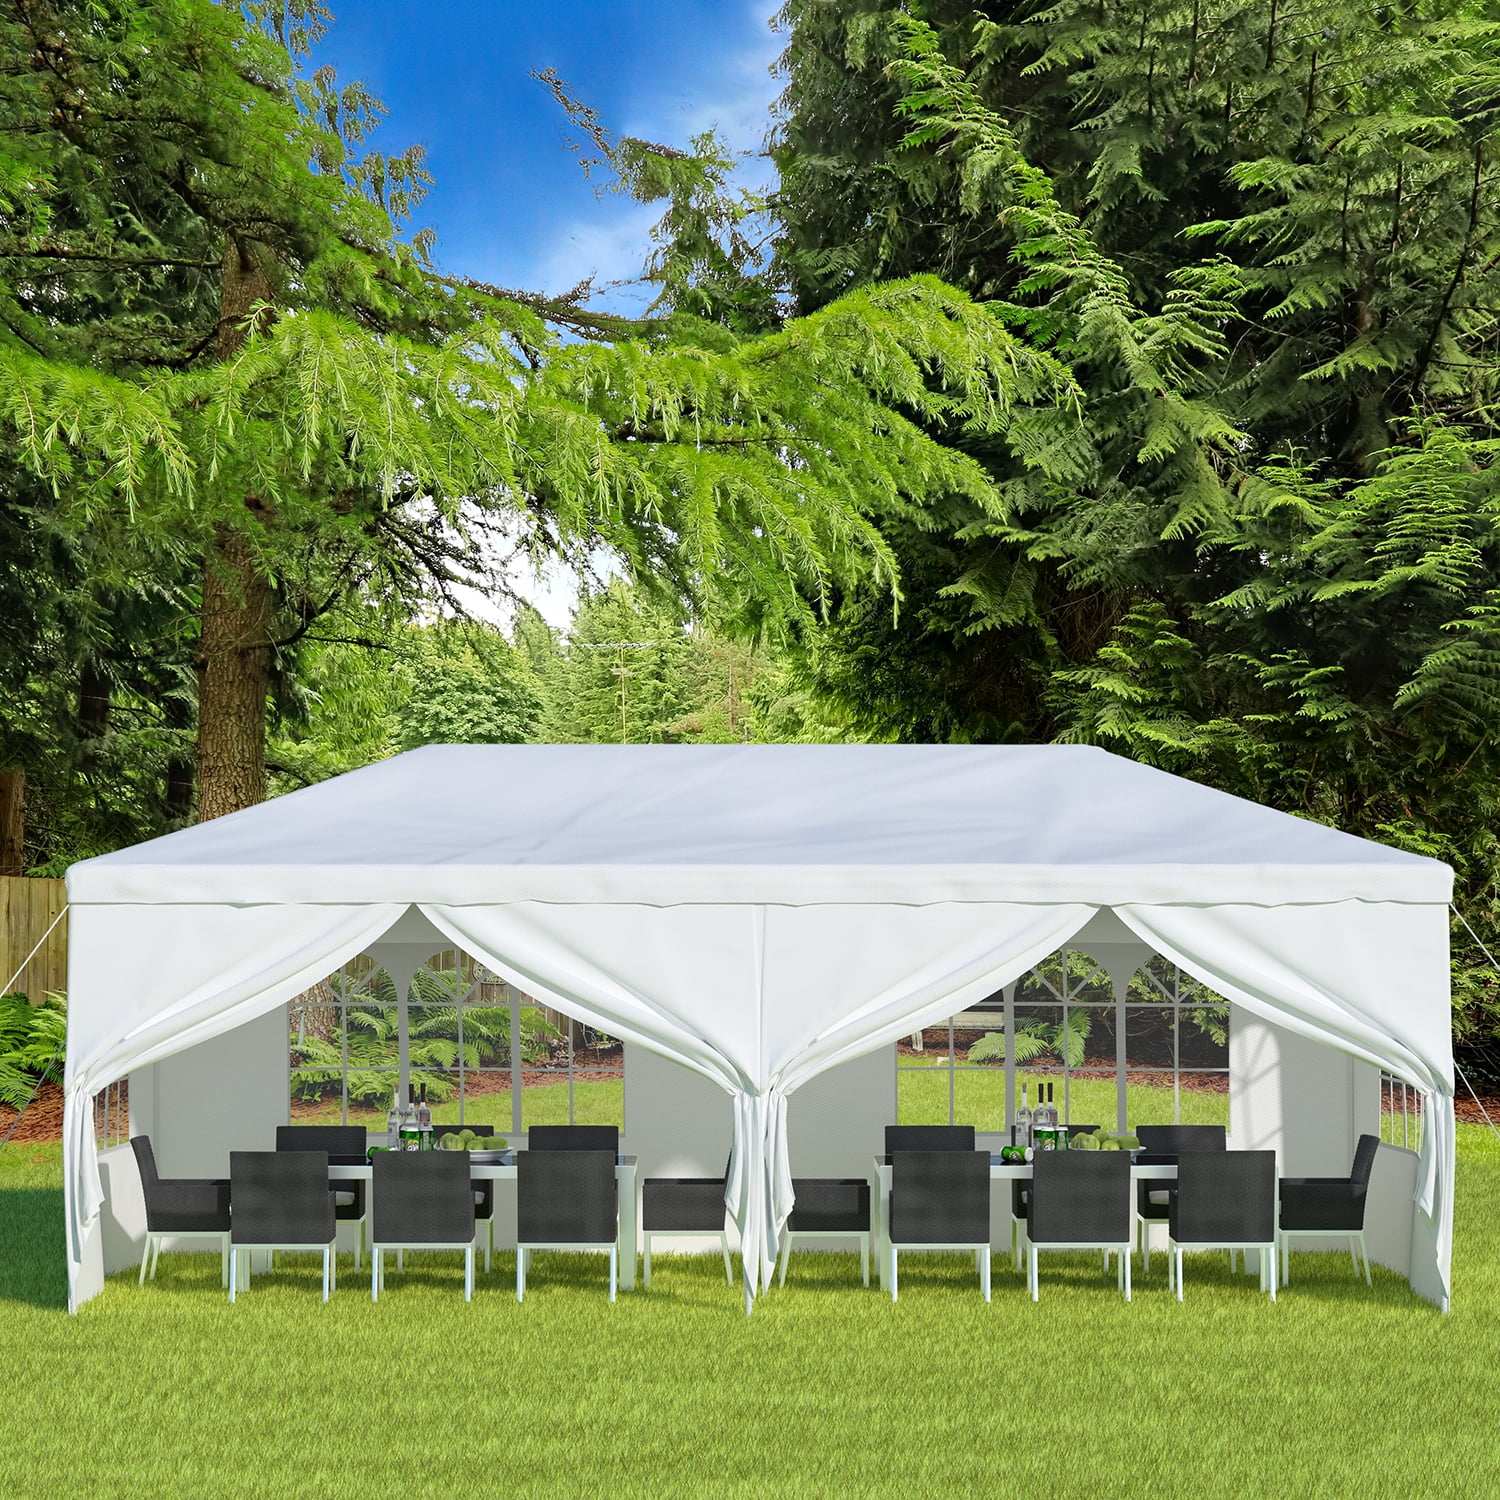 Details about   Outdoor Garden Wedding Party Tent Waterproof Gazebo 20 x 10FT Adjustable Height 